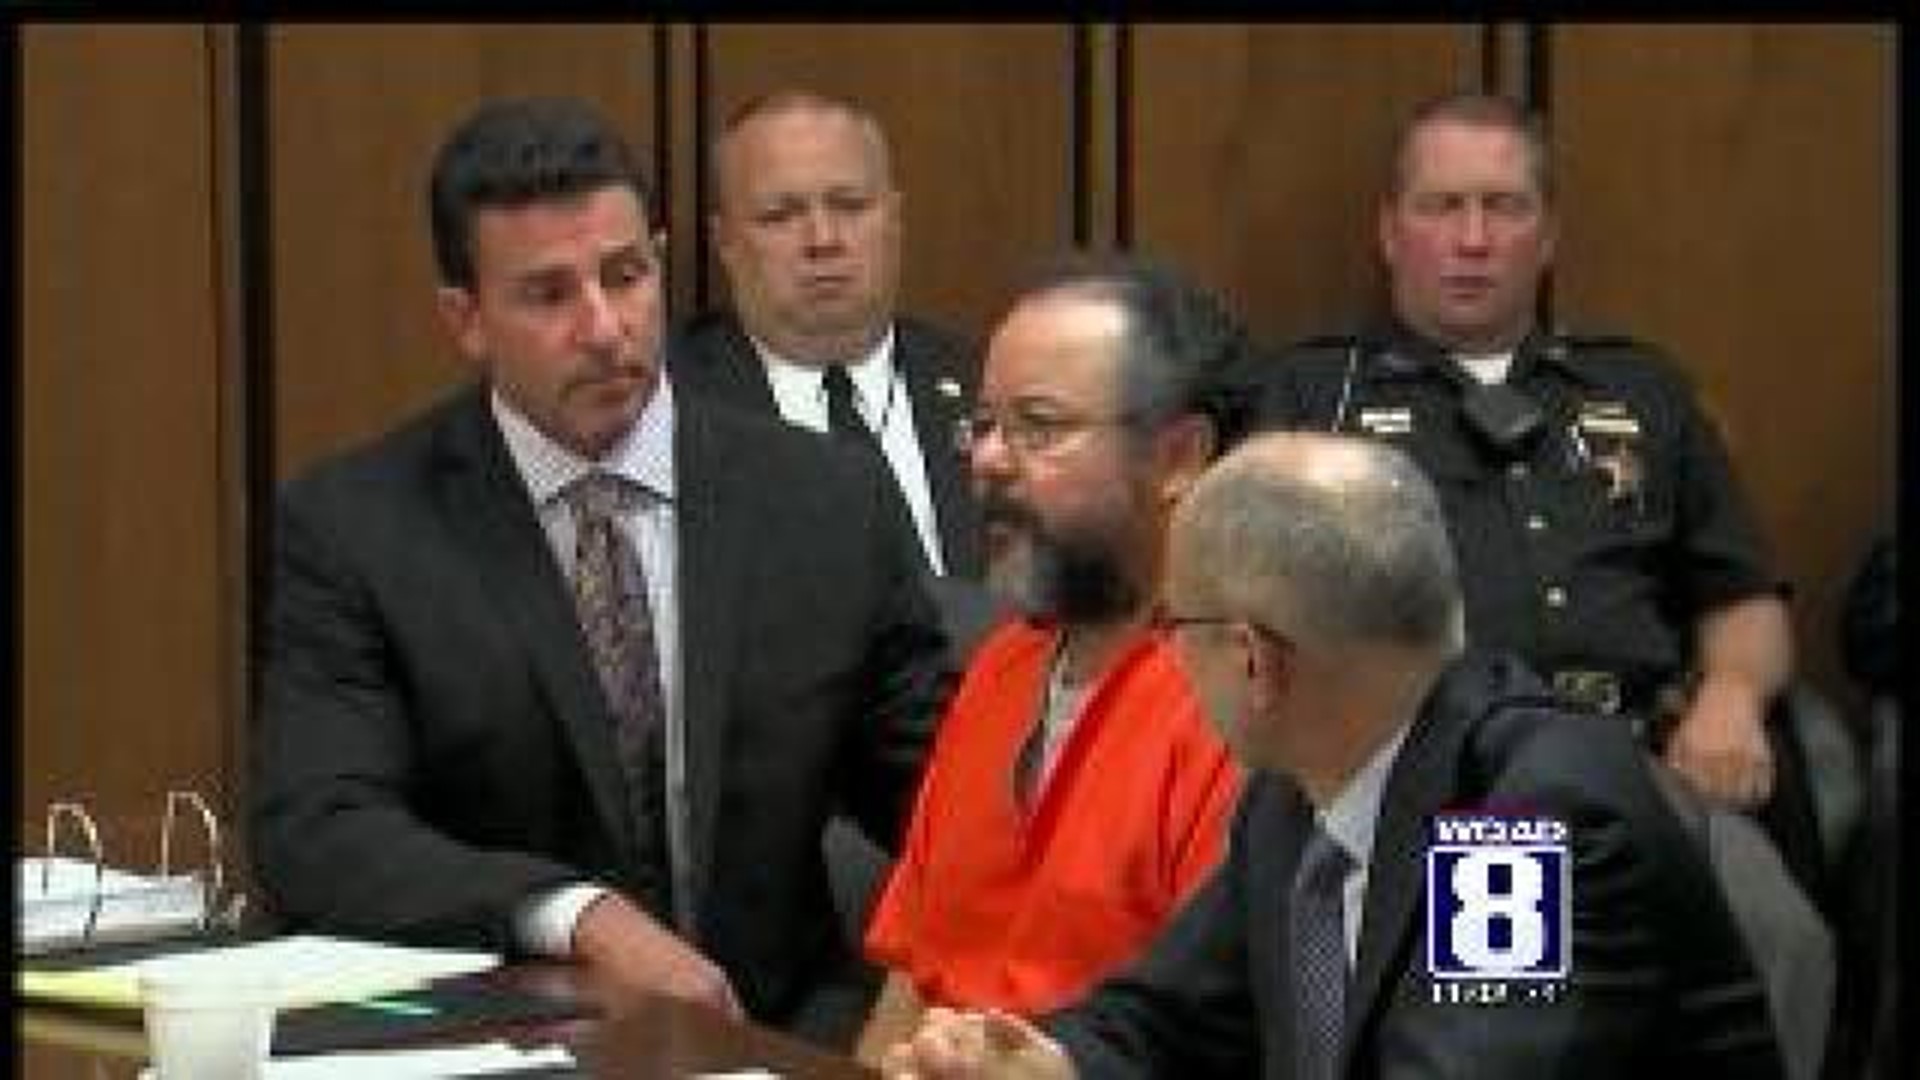 Castro being sentenced